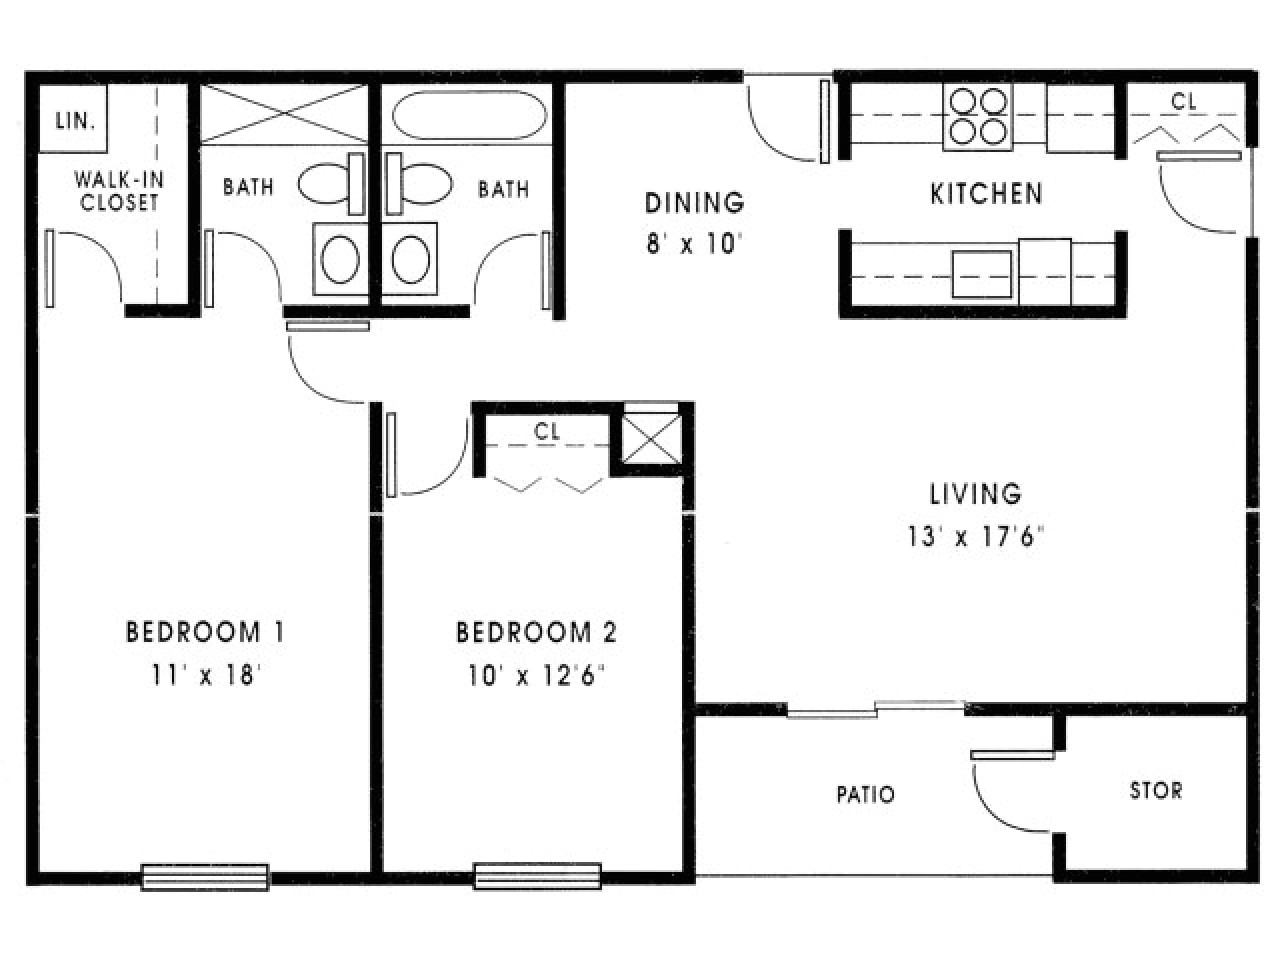 65eda2a5a4f105e5 small 2 bedroom house plans 1000 sq ft small 2 bedroom floor plans